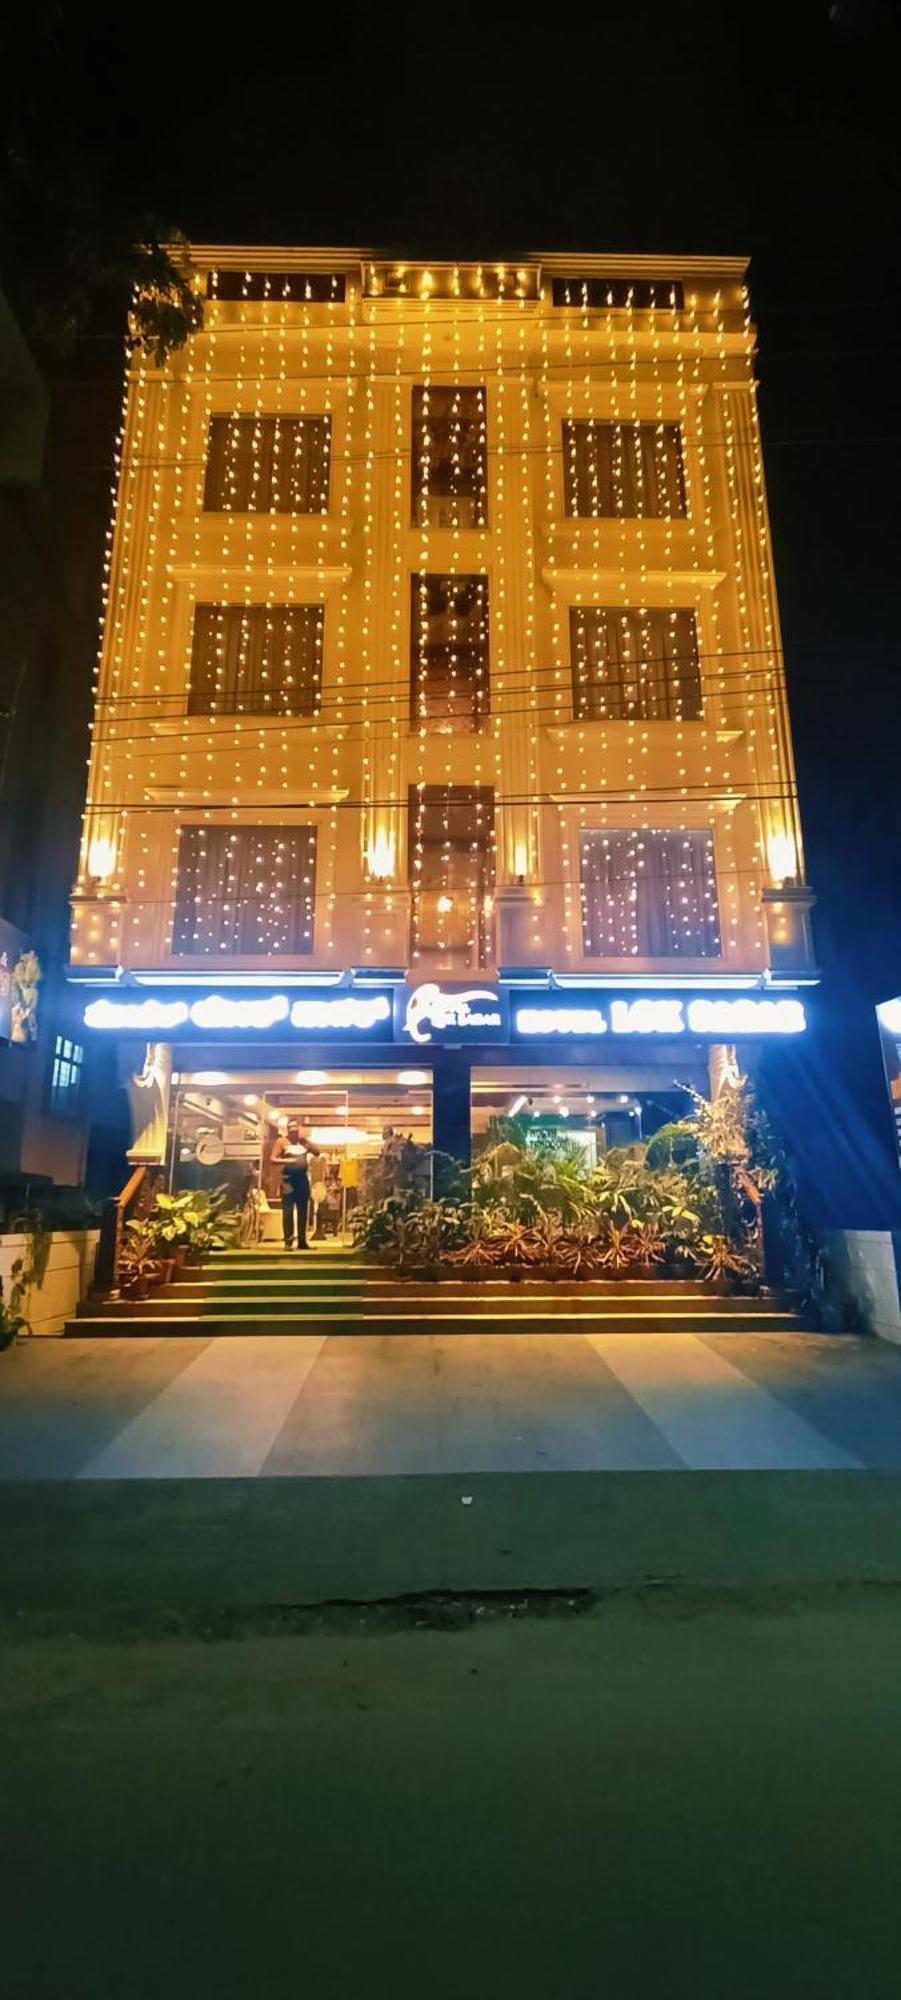 Hotel Lok Sagar Mysore Exterior photo